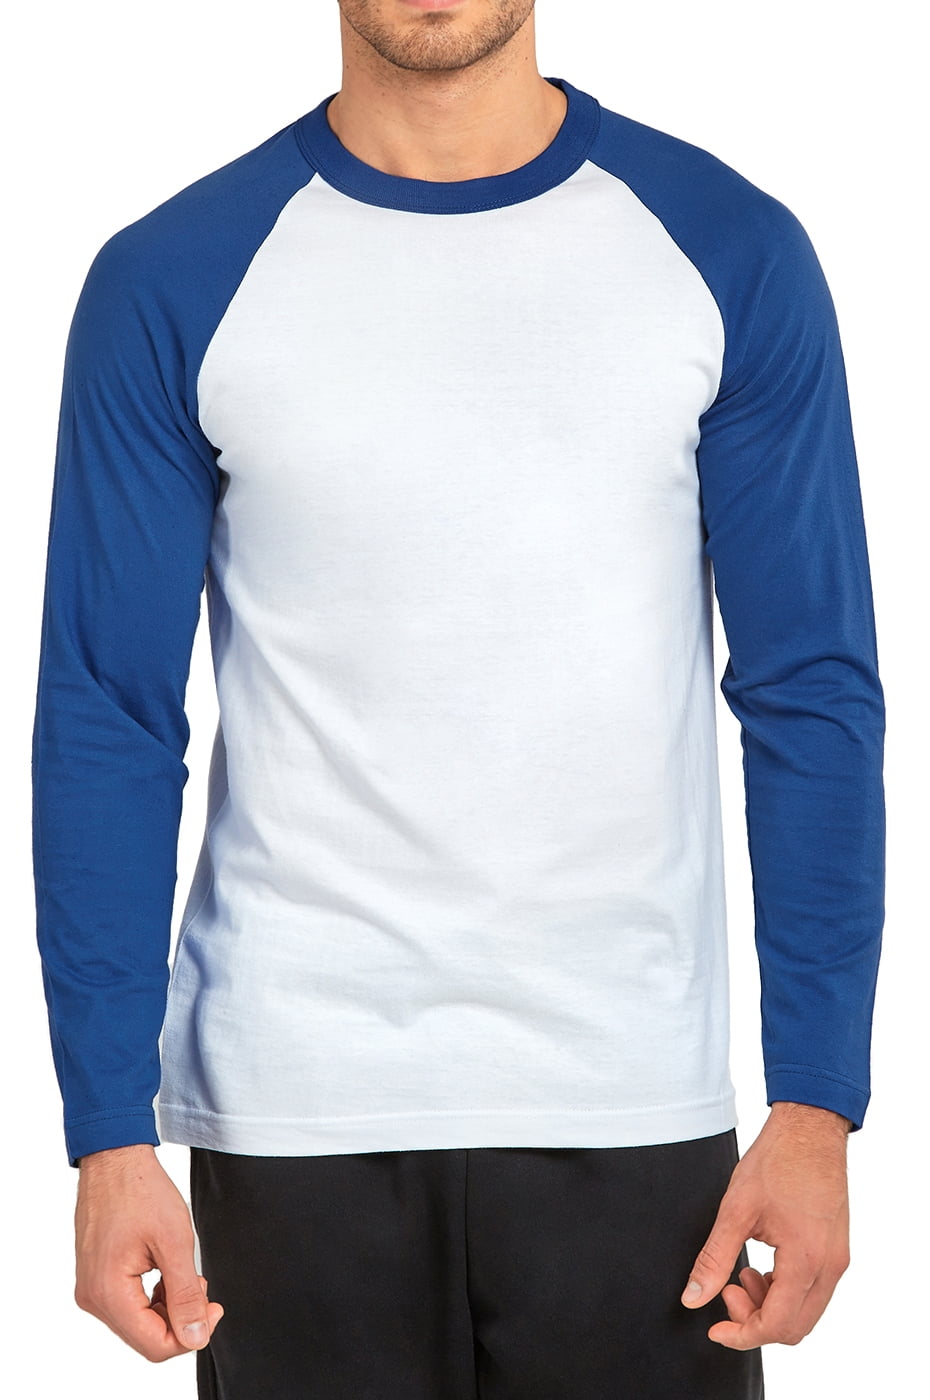 Blended - Men's Long Sleeve Baseball T-Shirt Jersey Raglan Two-Tone ...